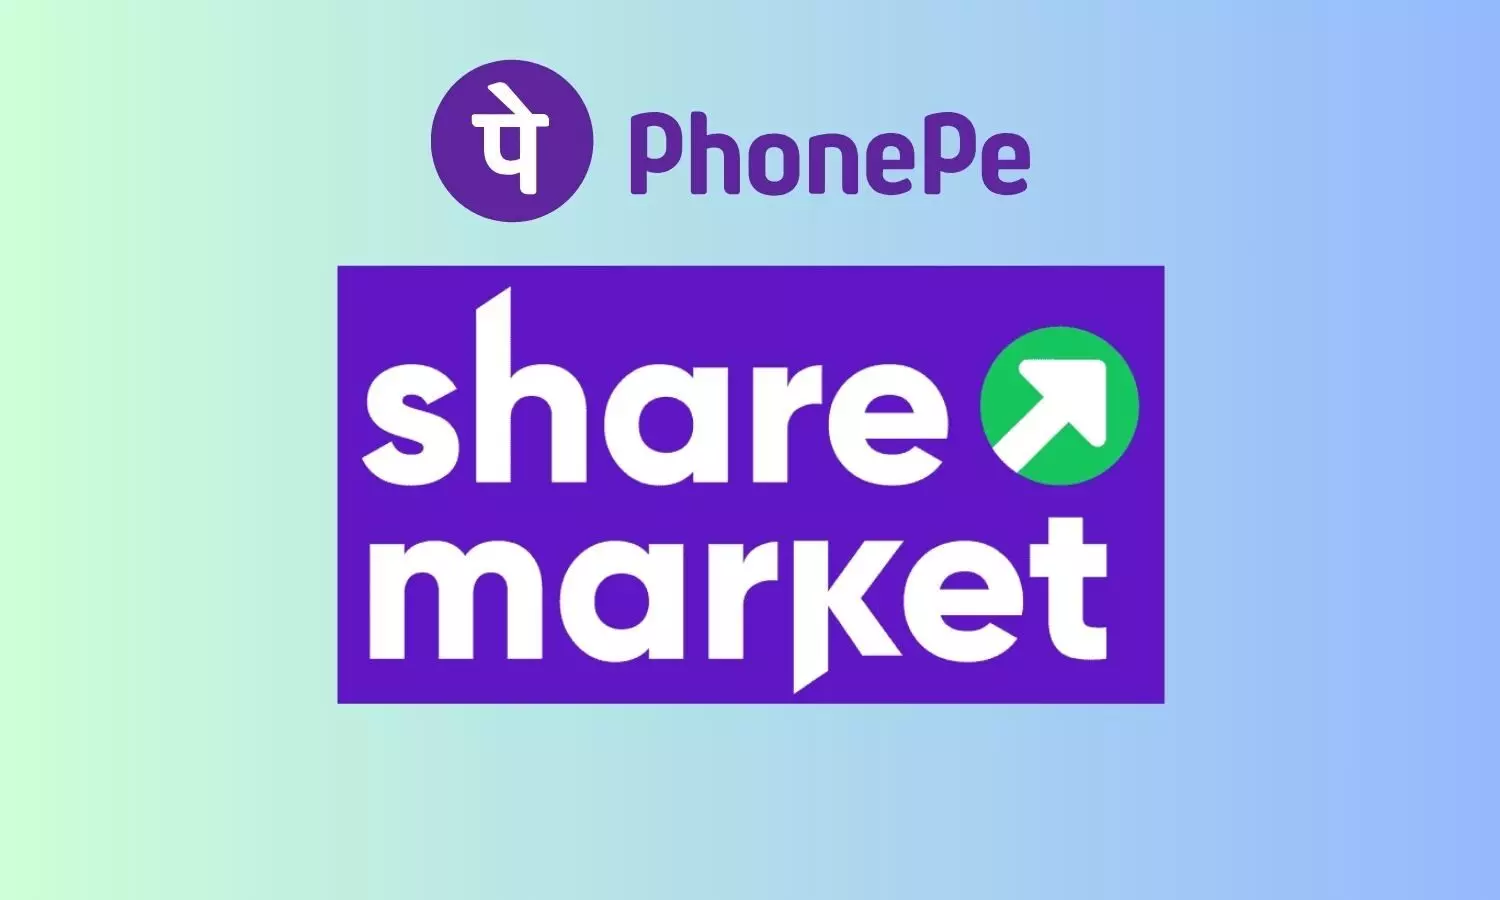 PhonePe Share.Market